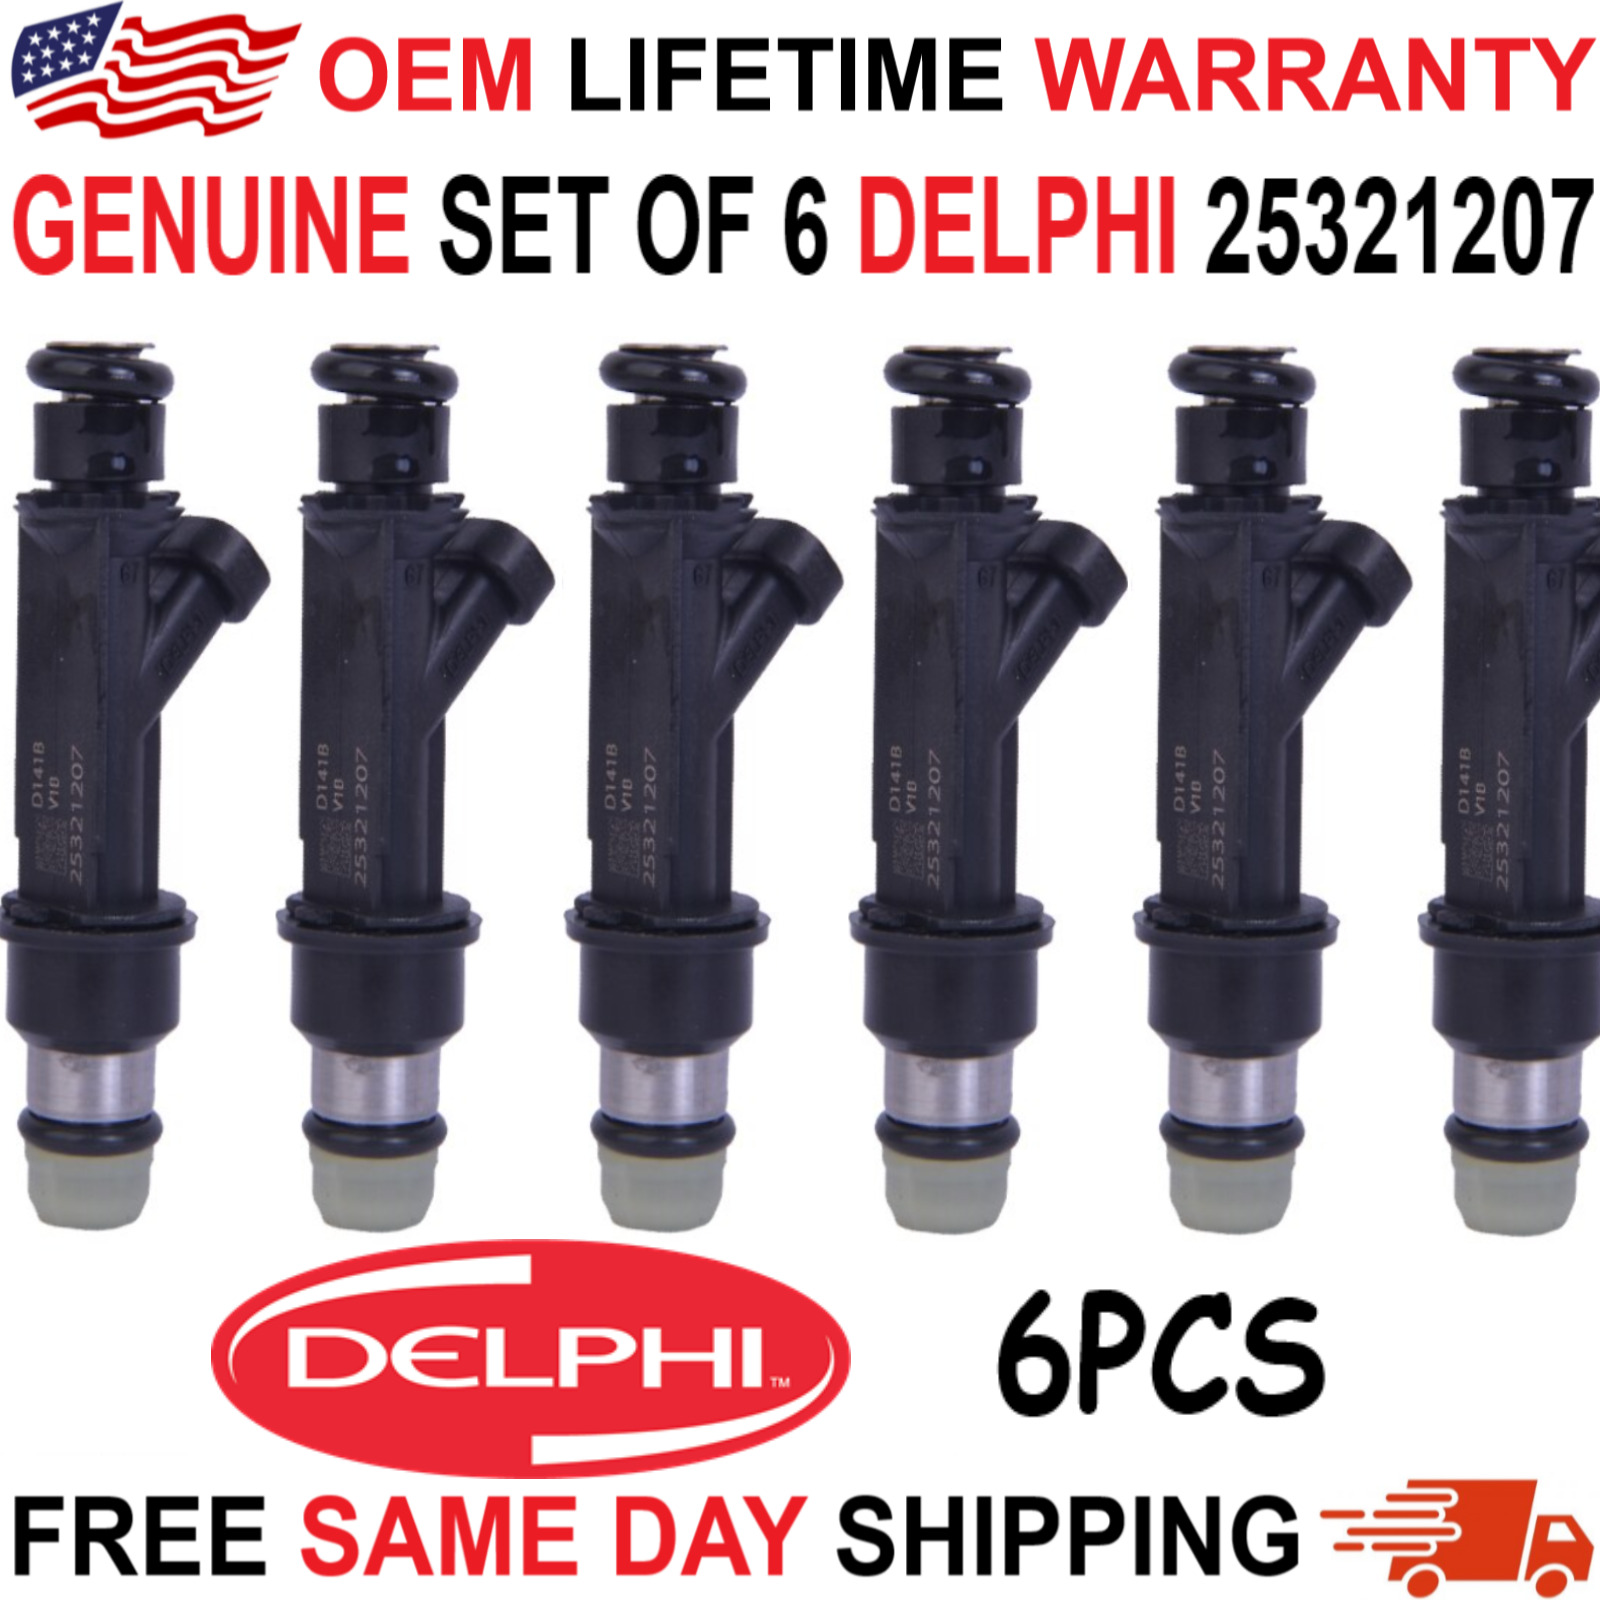 Genuine 6pcs DELPHI Fuel Injectors for 2002, 2003, 2004 Oldsmobile Bravada 4.2L